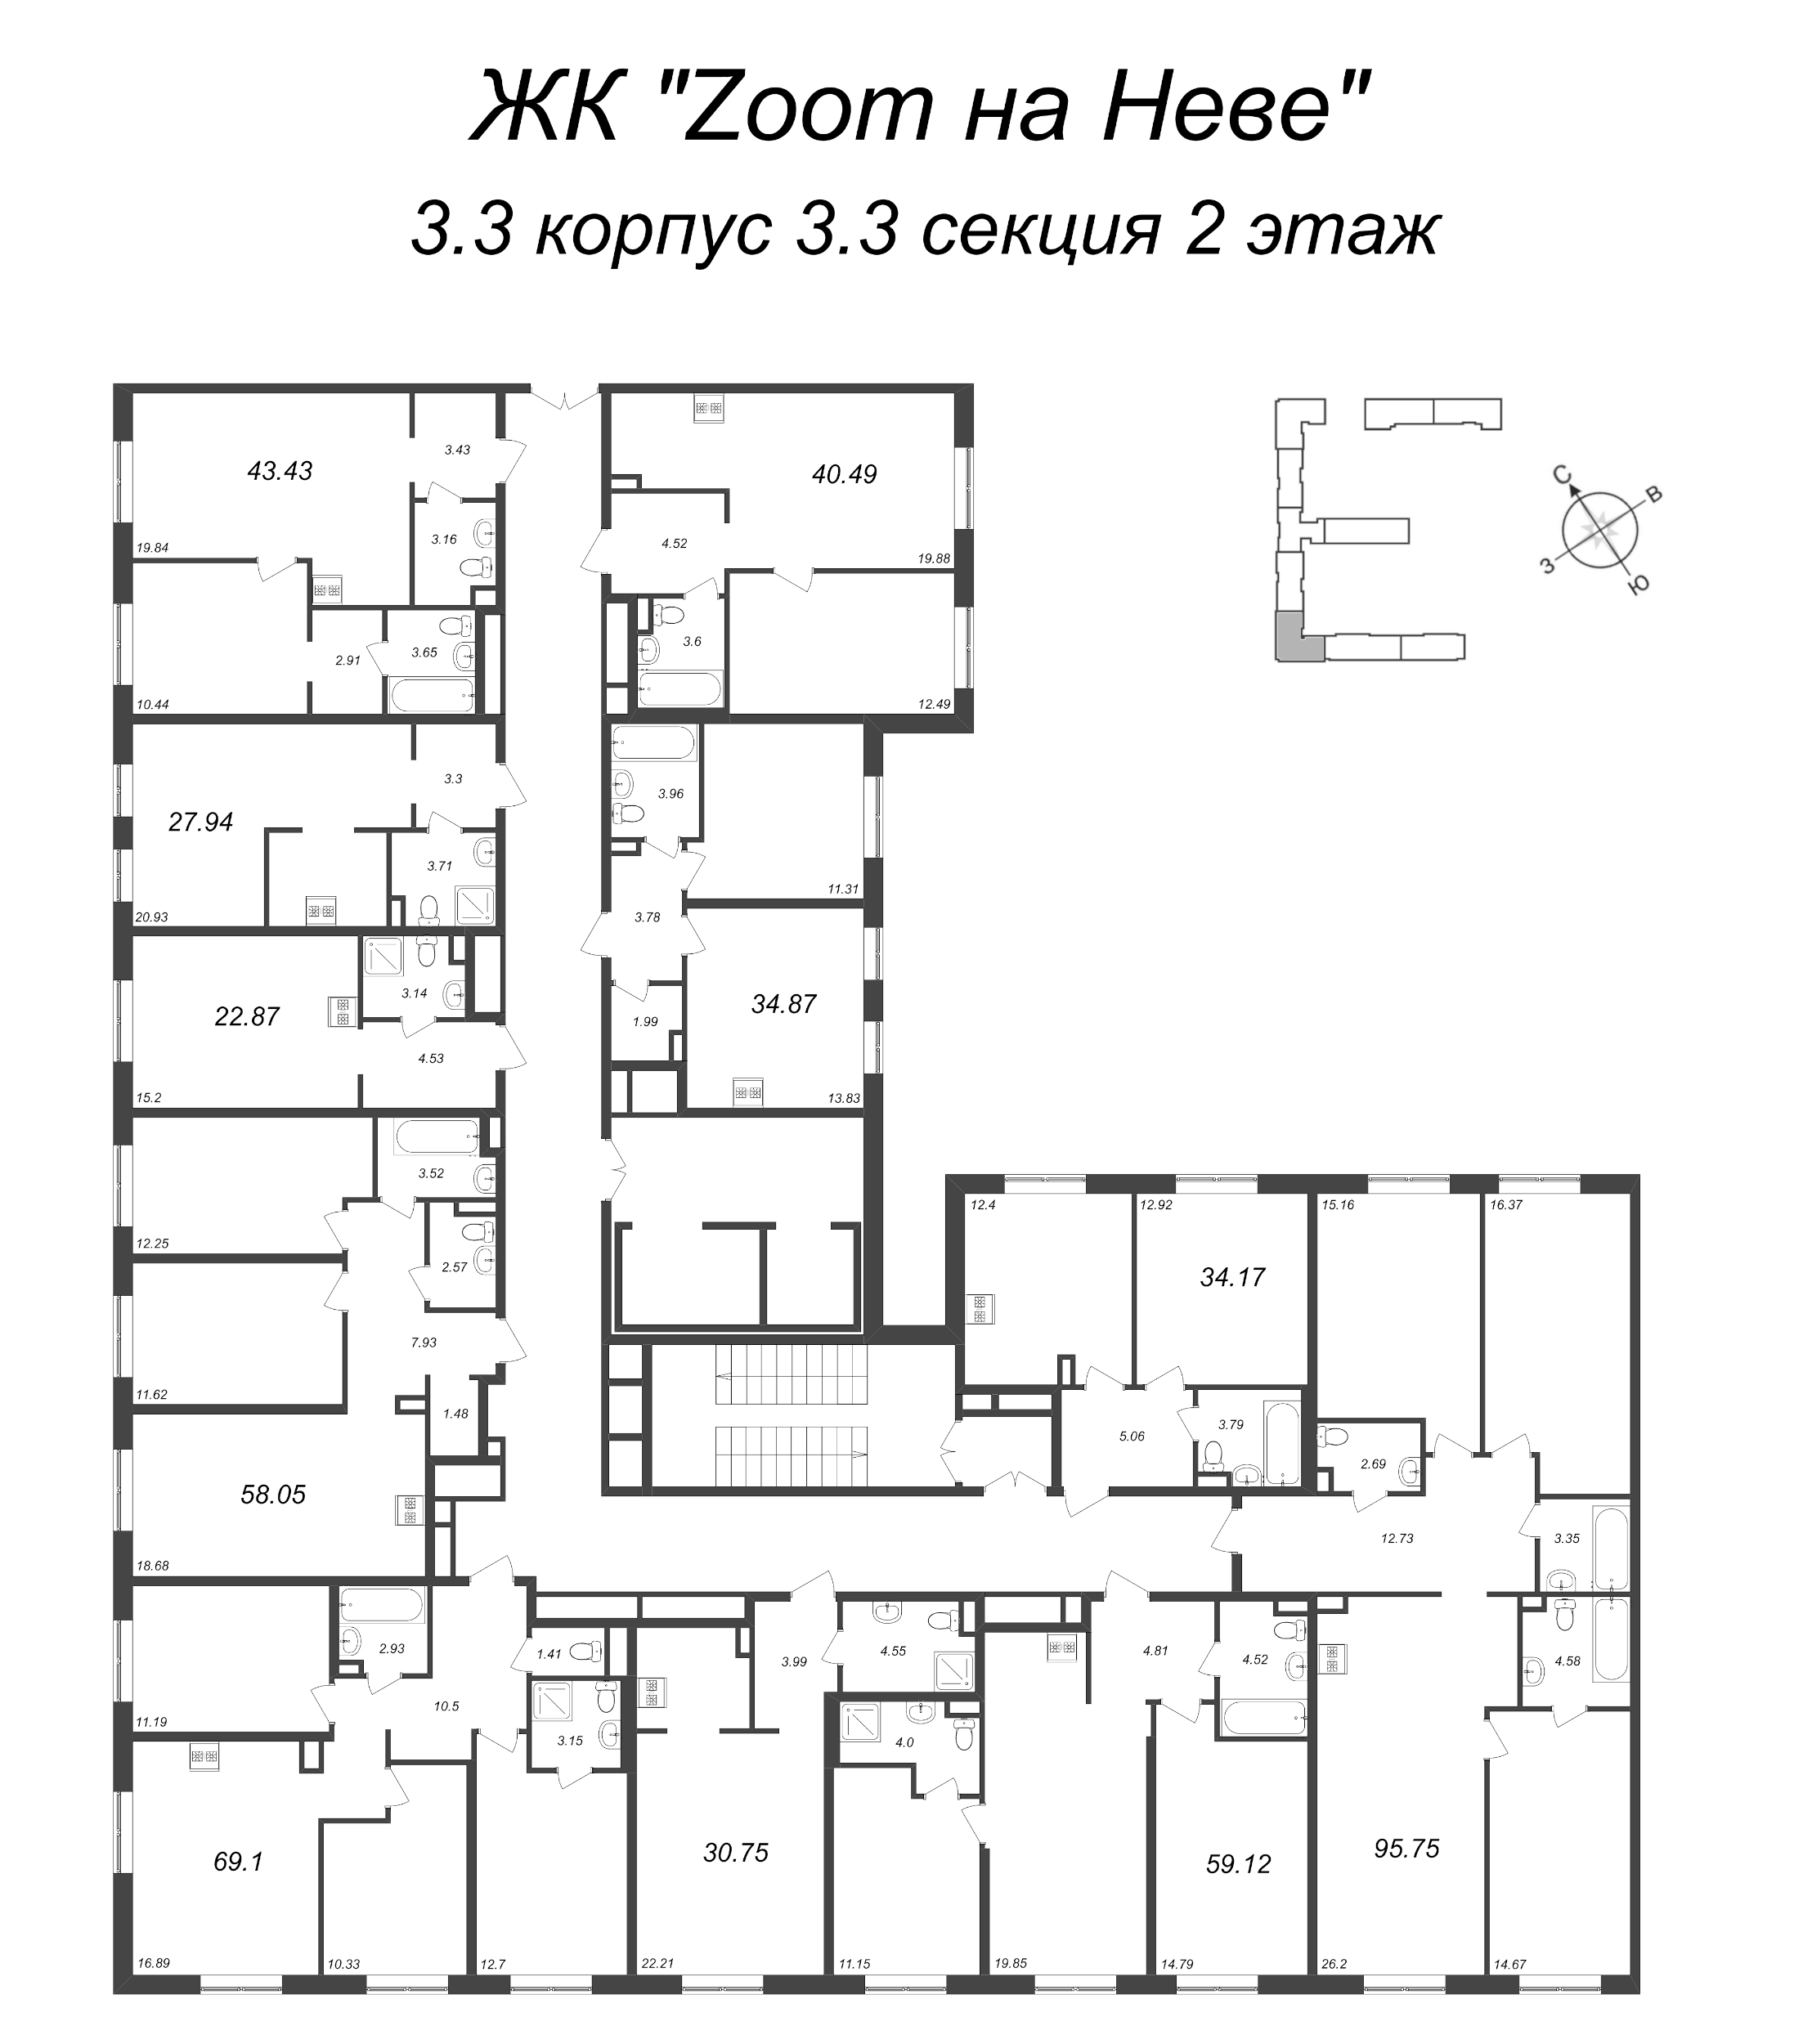 2-комнатная (Евро) квартира, 40.49 м² - планировка этажа